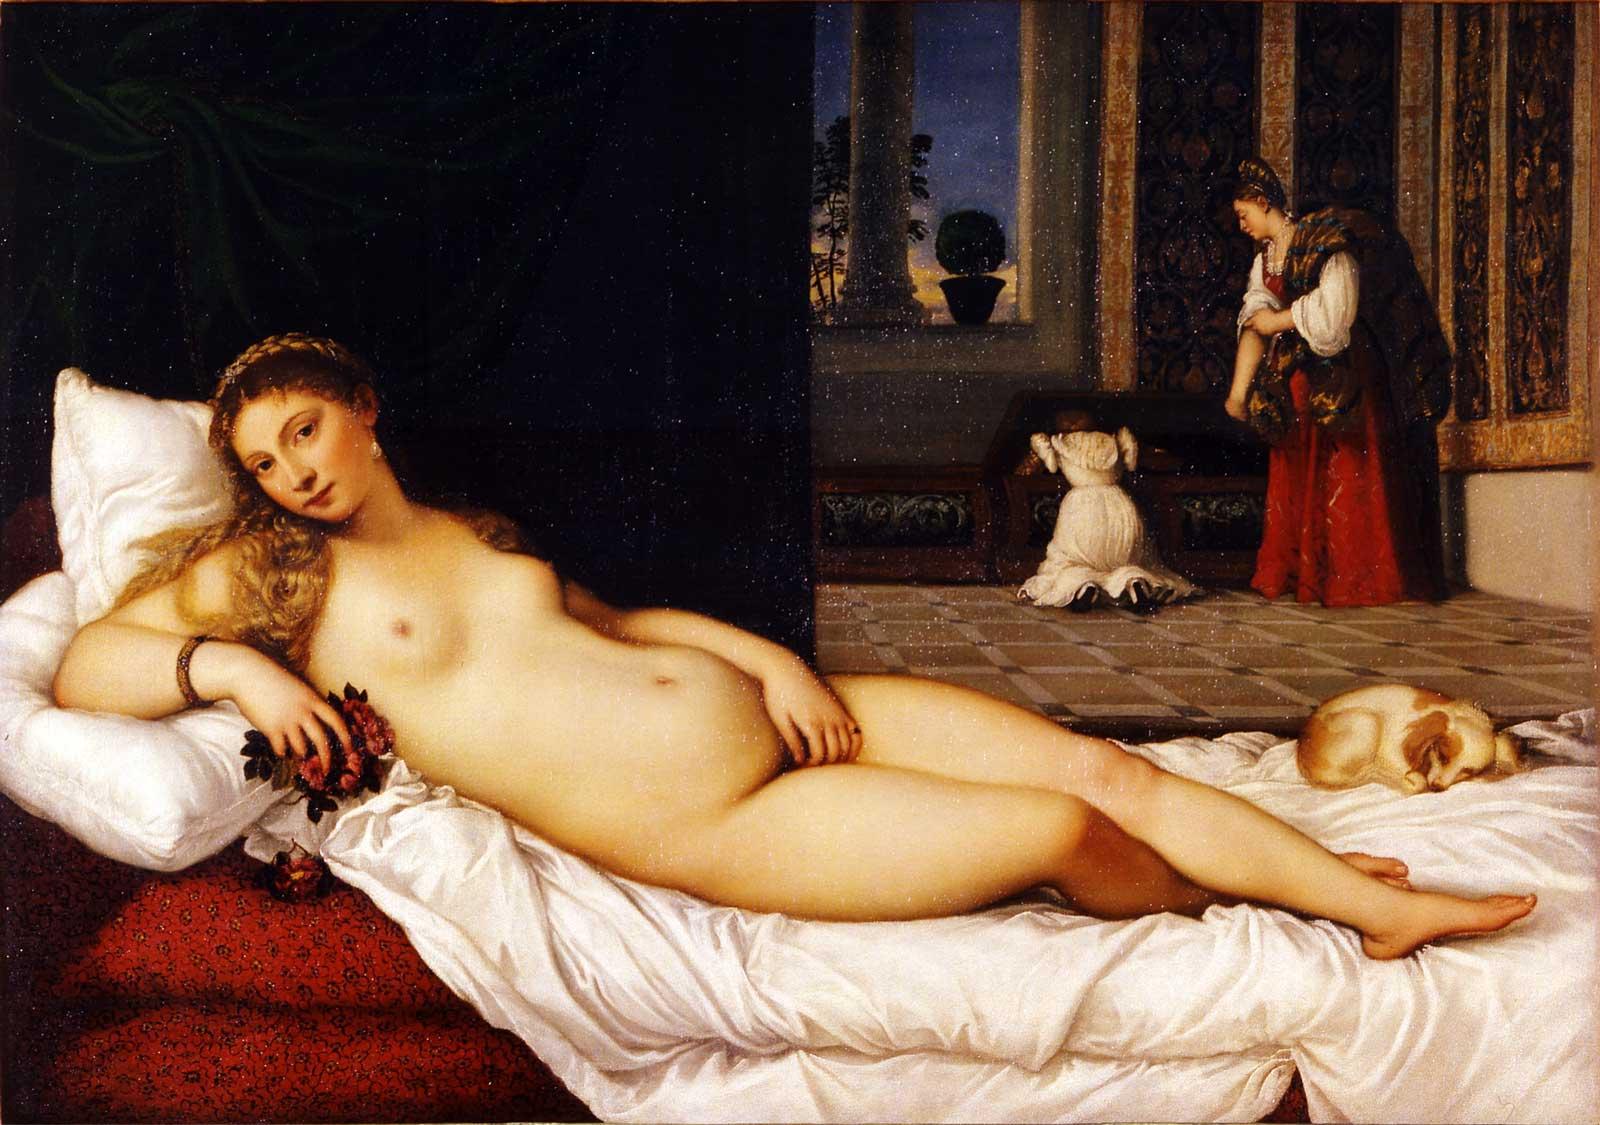 Titian, Venus of Urbino (1538)